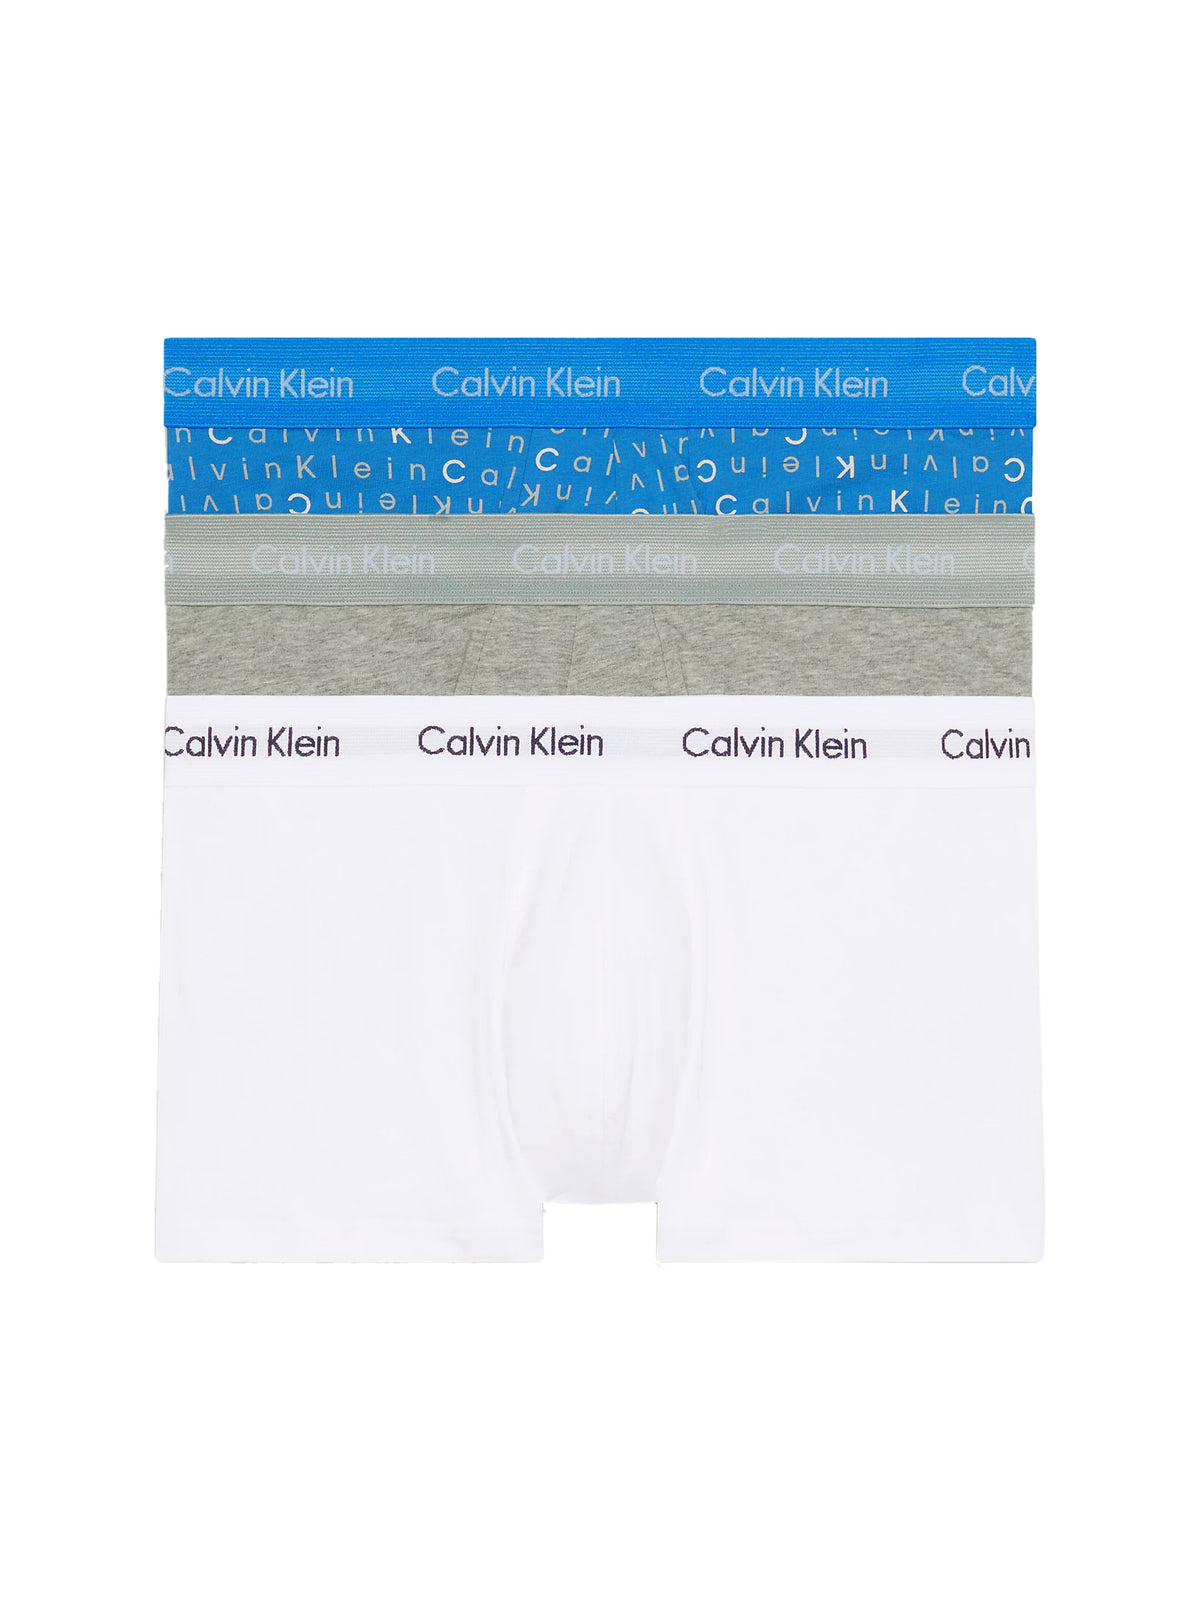 Mens Calvin Klein Boxer Shorts Low Rise Trunks 3 Pack, 01, U2664G, Gry Hthr, Wht, Plc Bl_Sbdd Ttl Prt